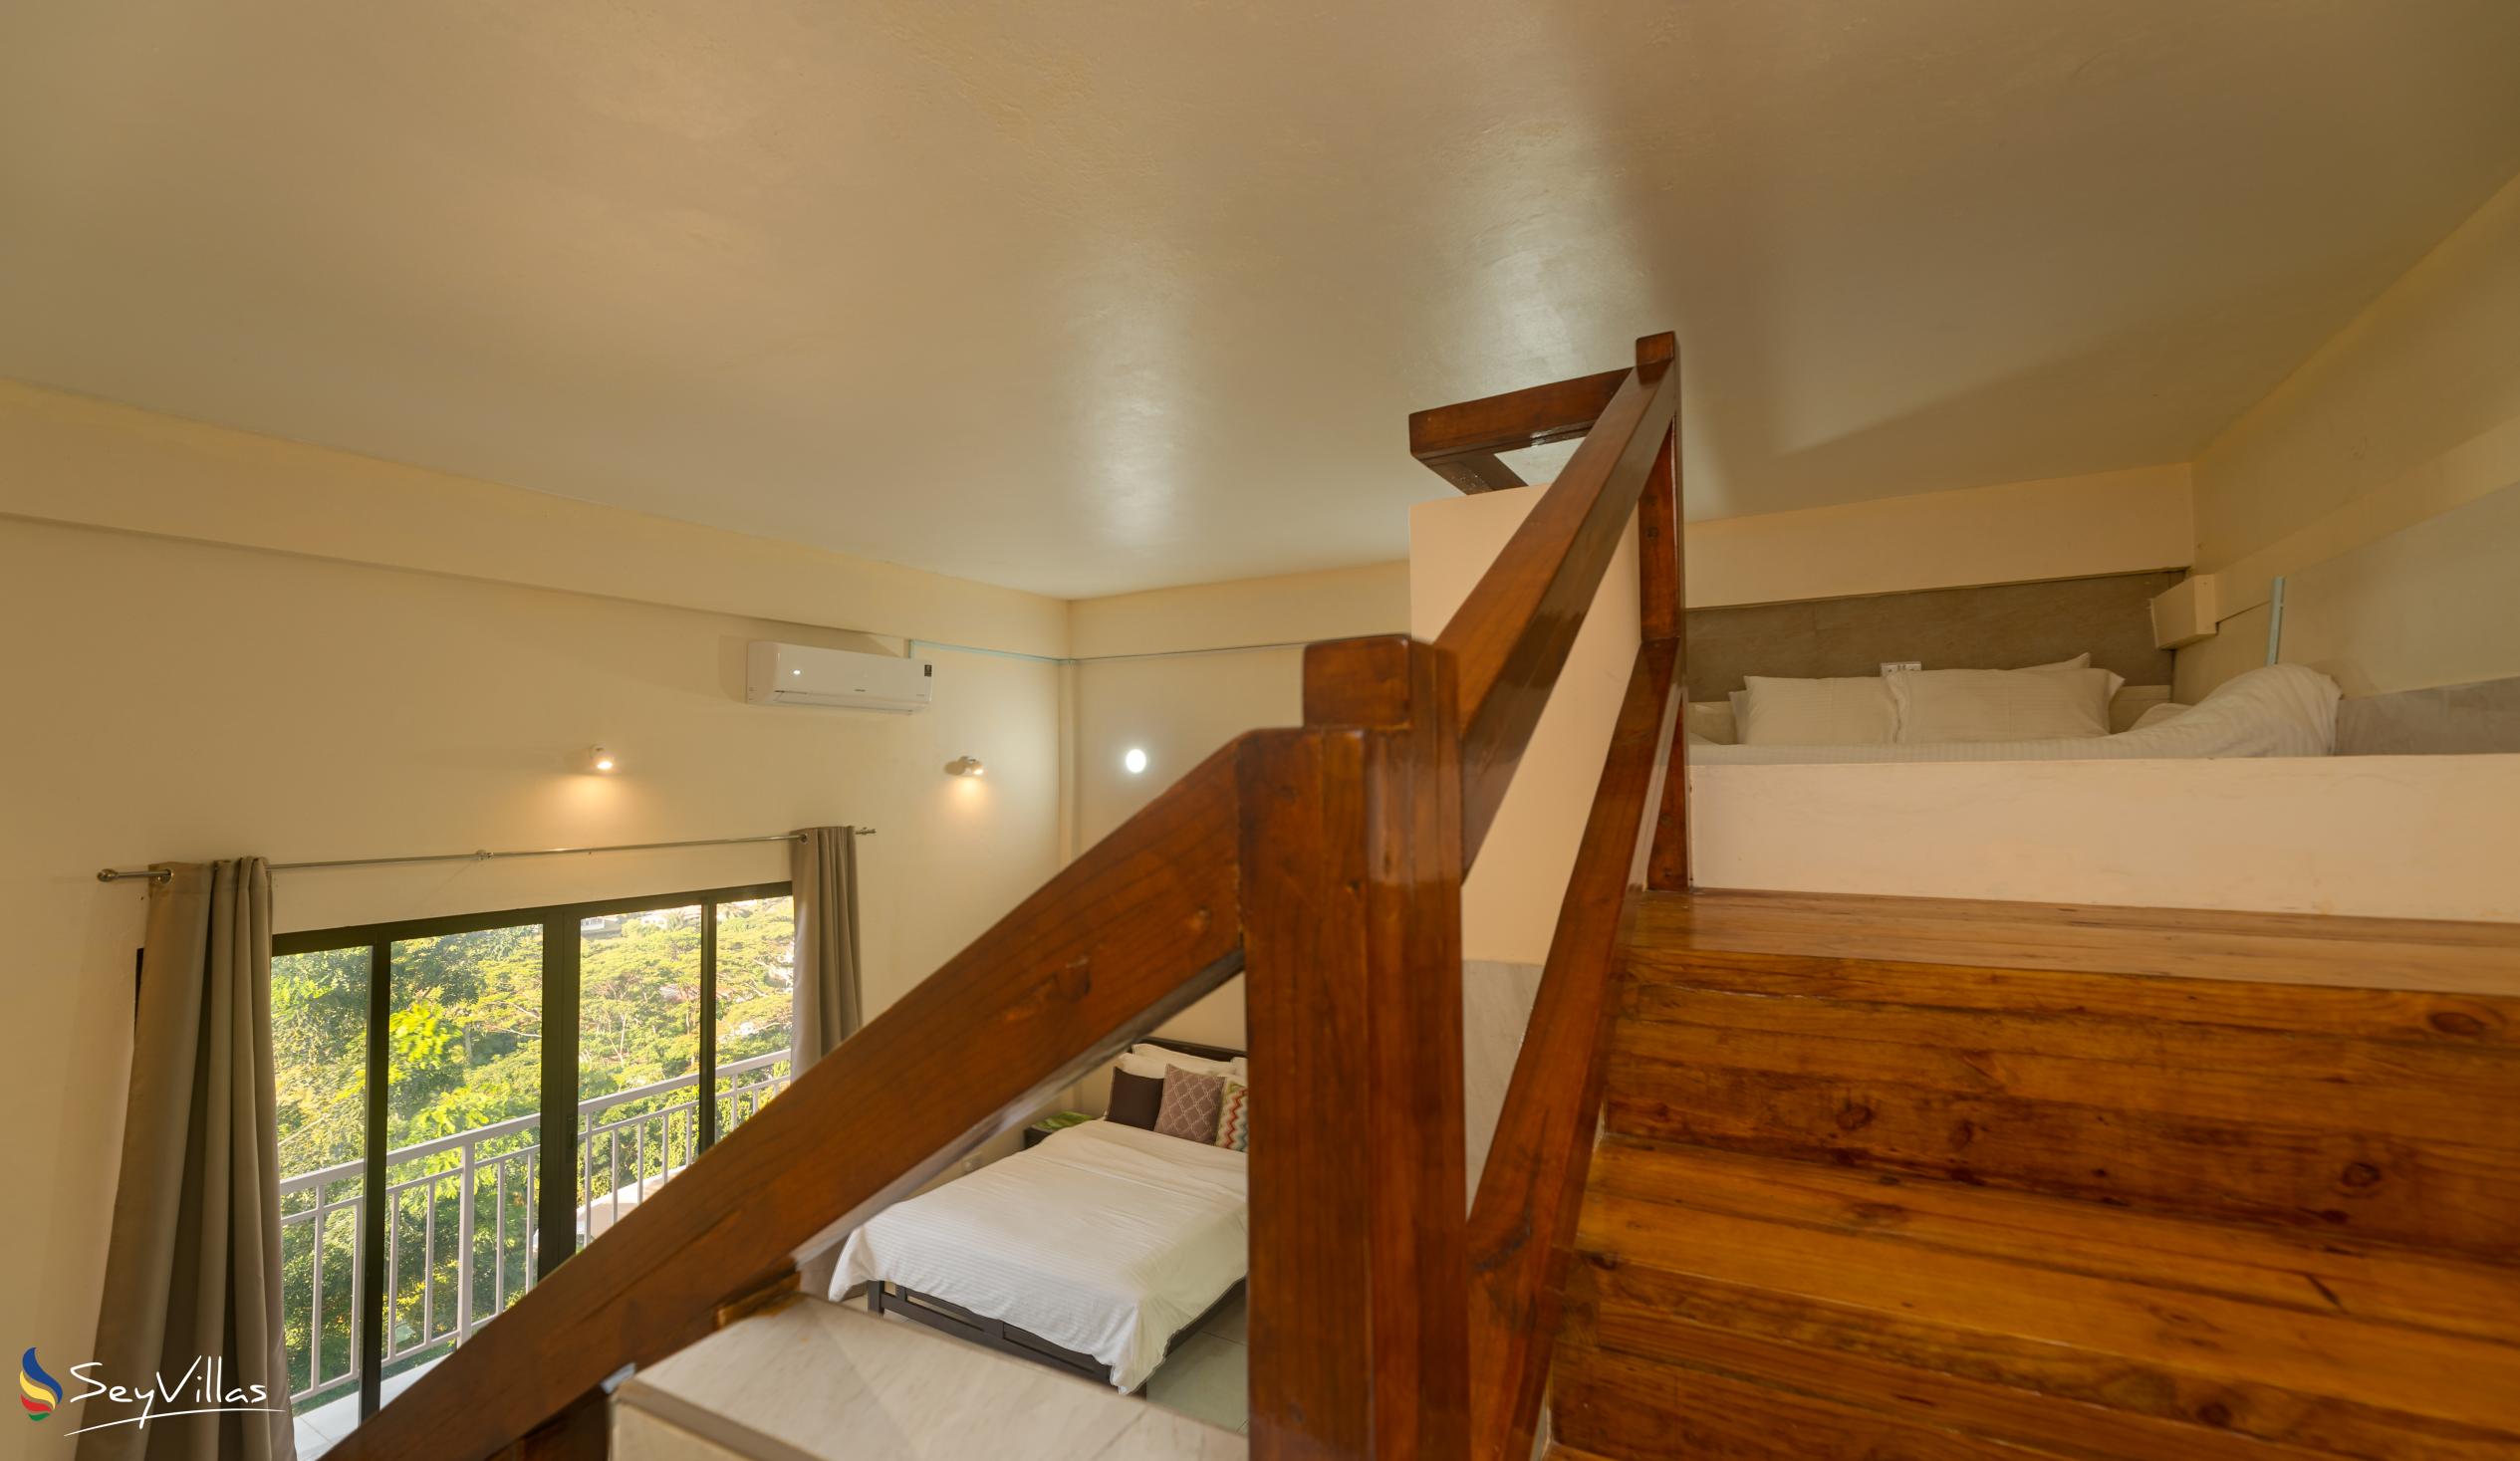 Photo 56: Maison L'Horizon - 1-Bedroom Apartment Lalin - Mahé (Seychelles)